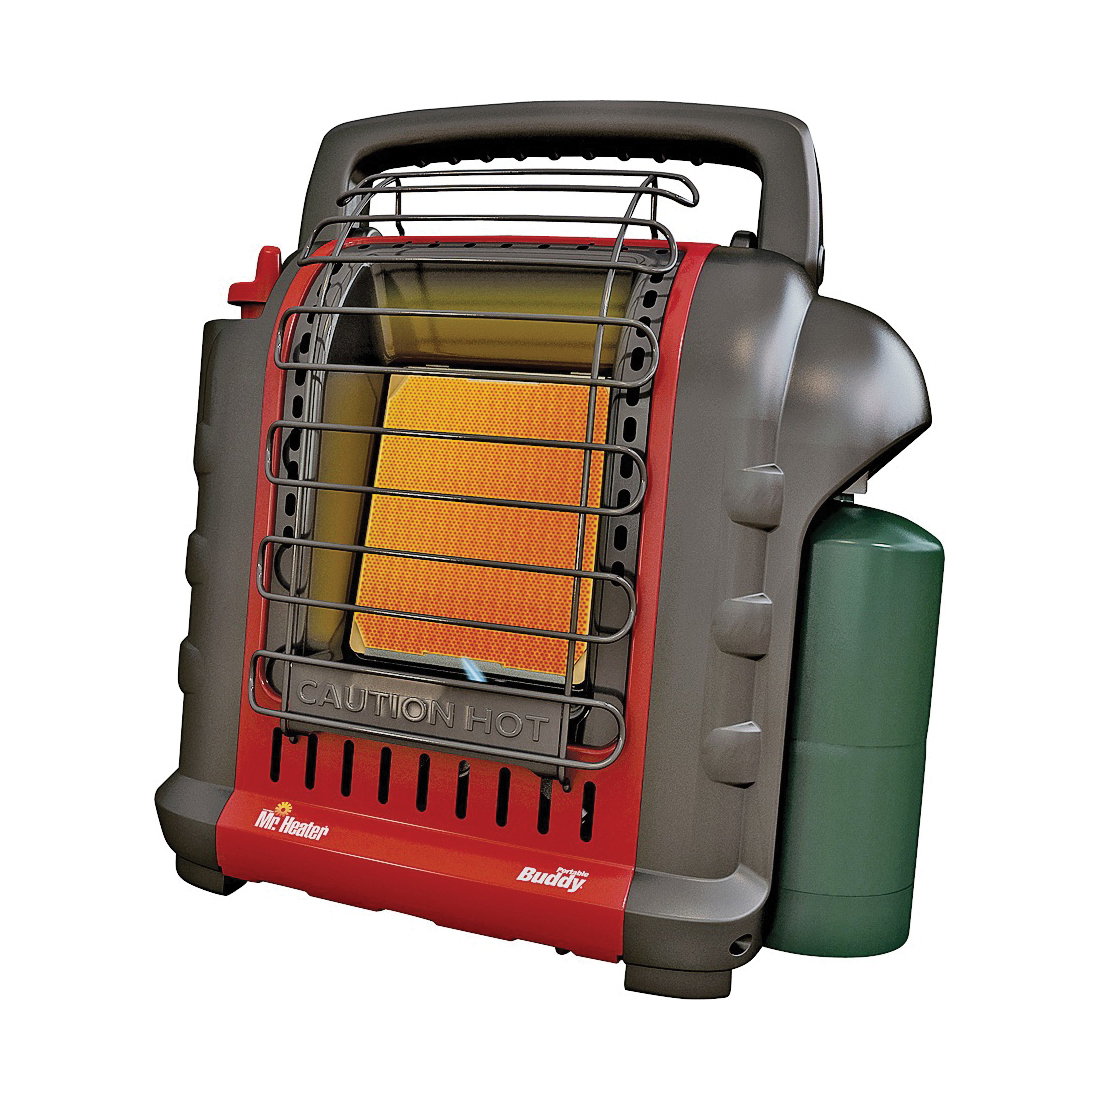 Mr. Heater F232000 Portable Buddy Heater, 9 in W, 15 in H, 4000, 9000 Btu Heating, Propane, Gray/Red - 1